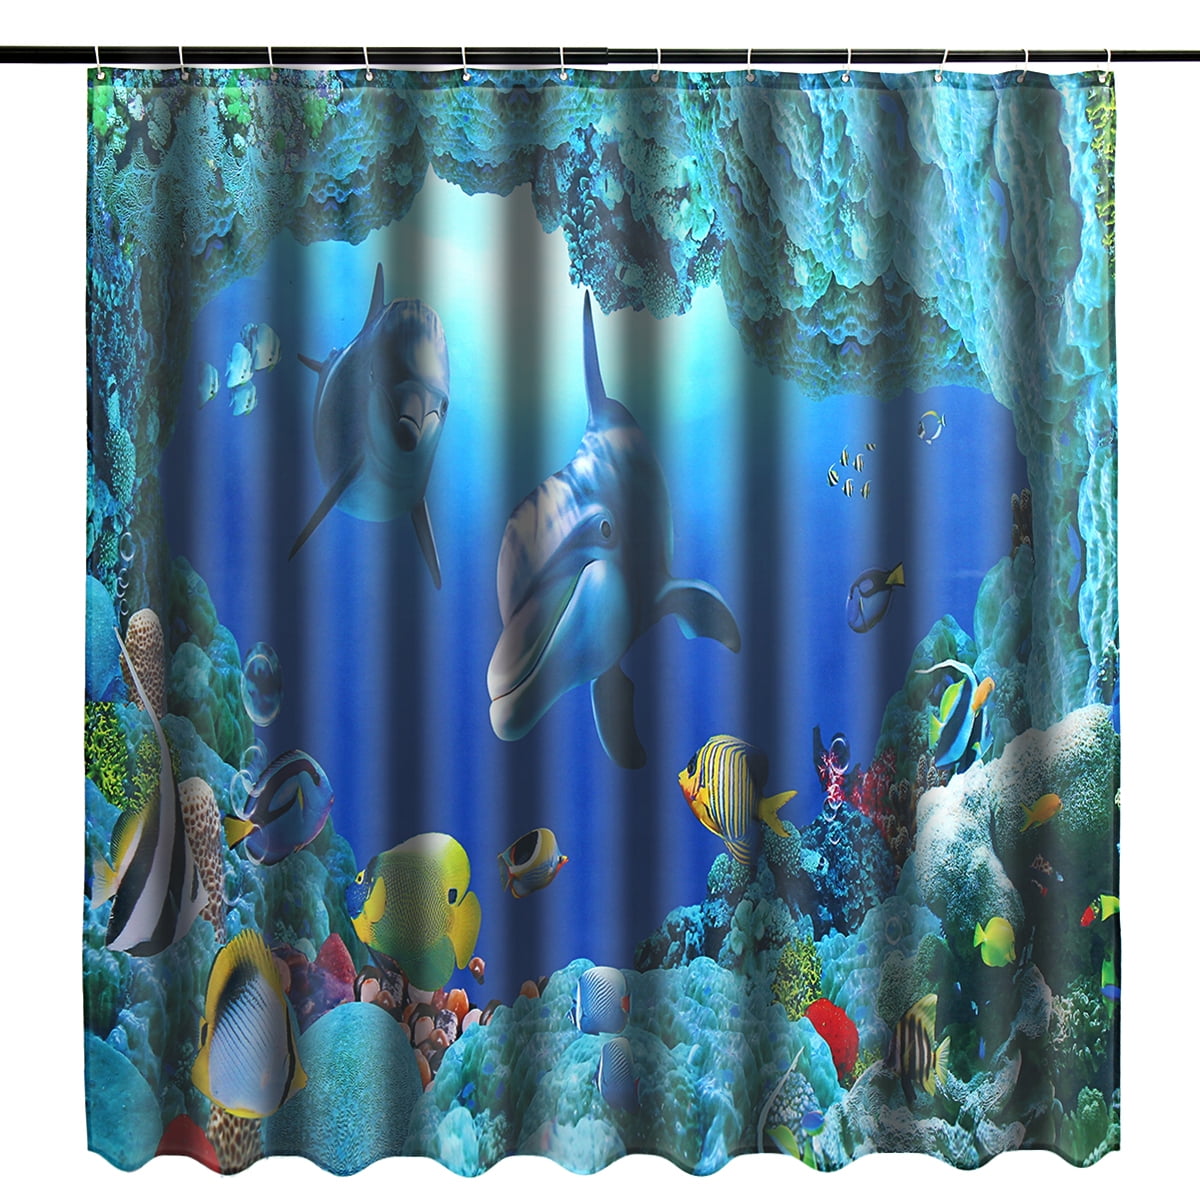 12 Hooks Kit Bathroom 180 x 180cm PEVA Waterproof Shower Curtain dolphin 